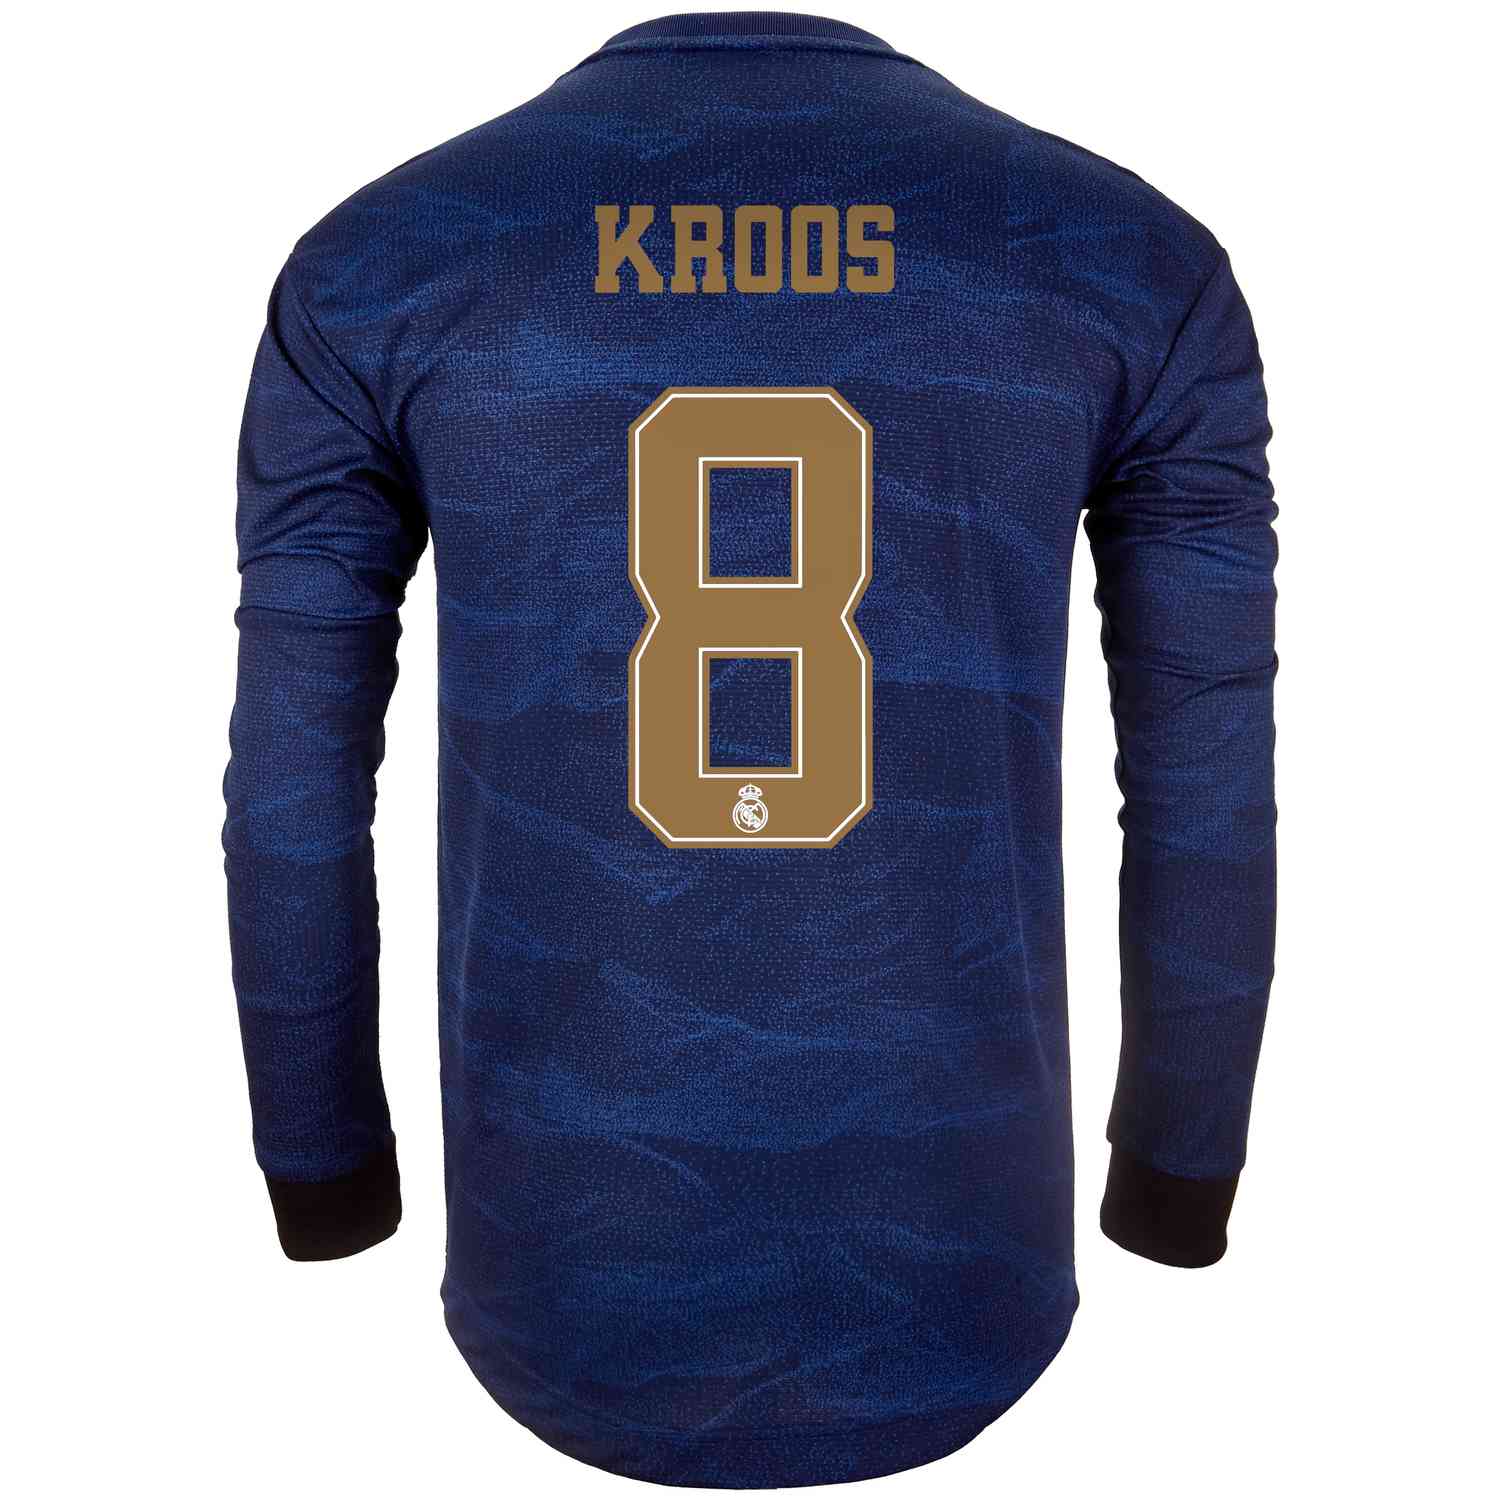 kroos jersey number